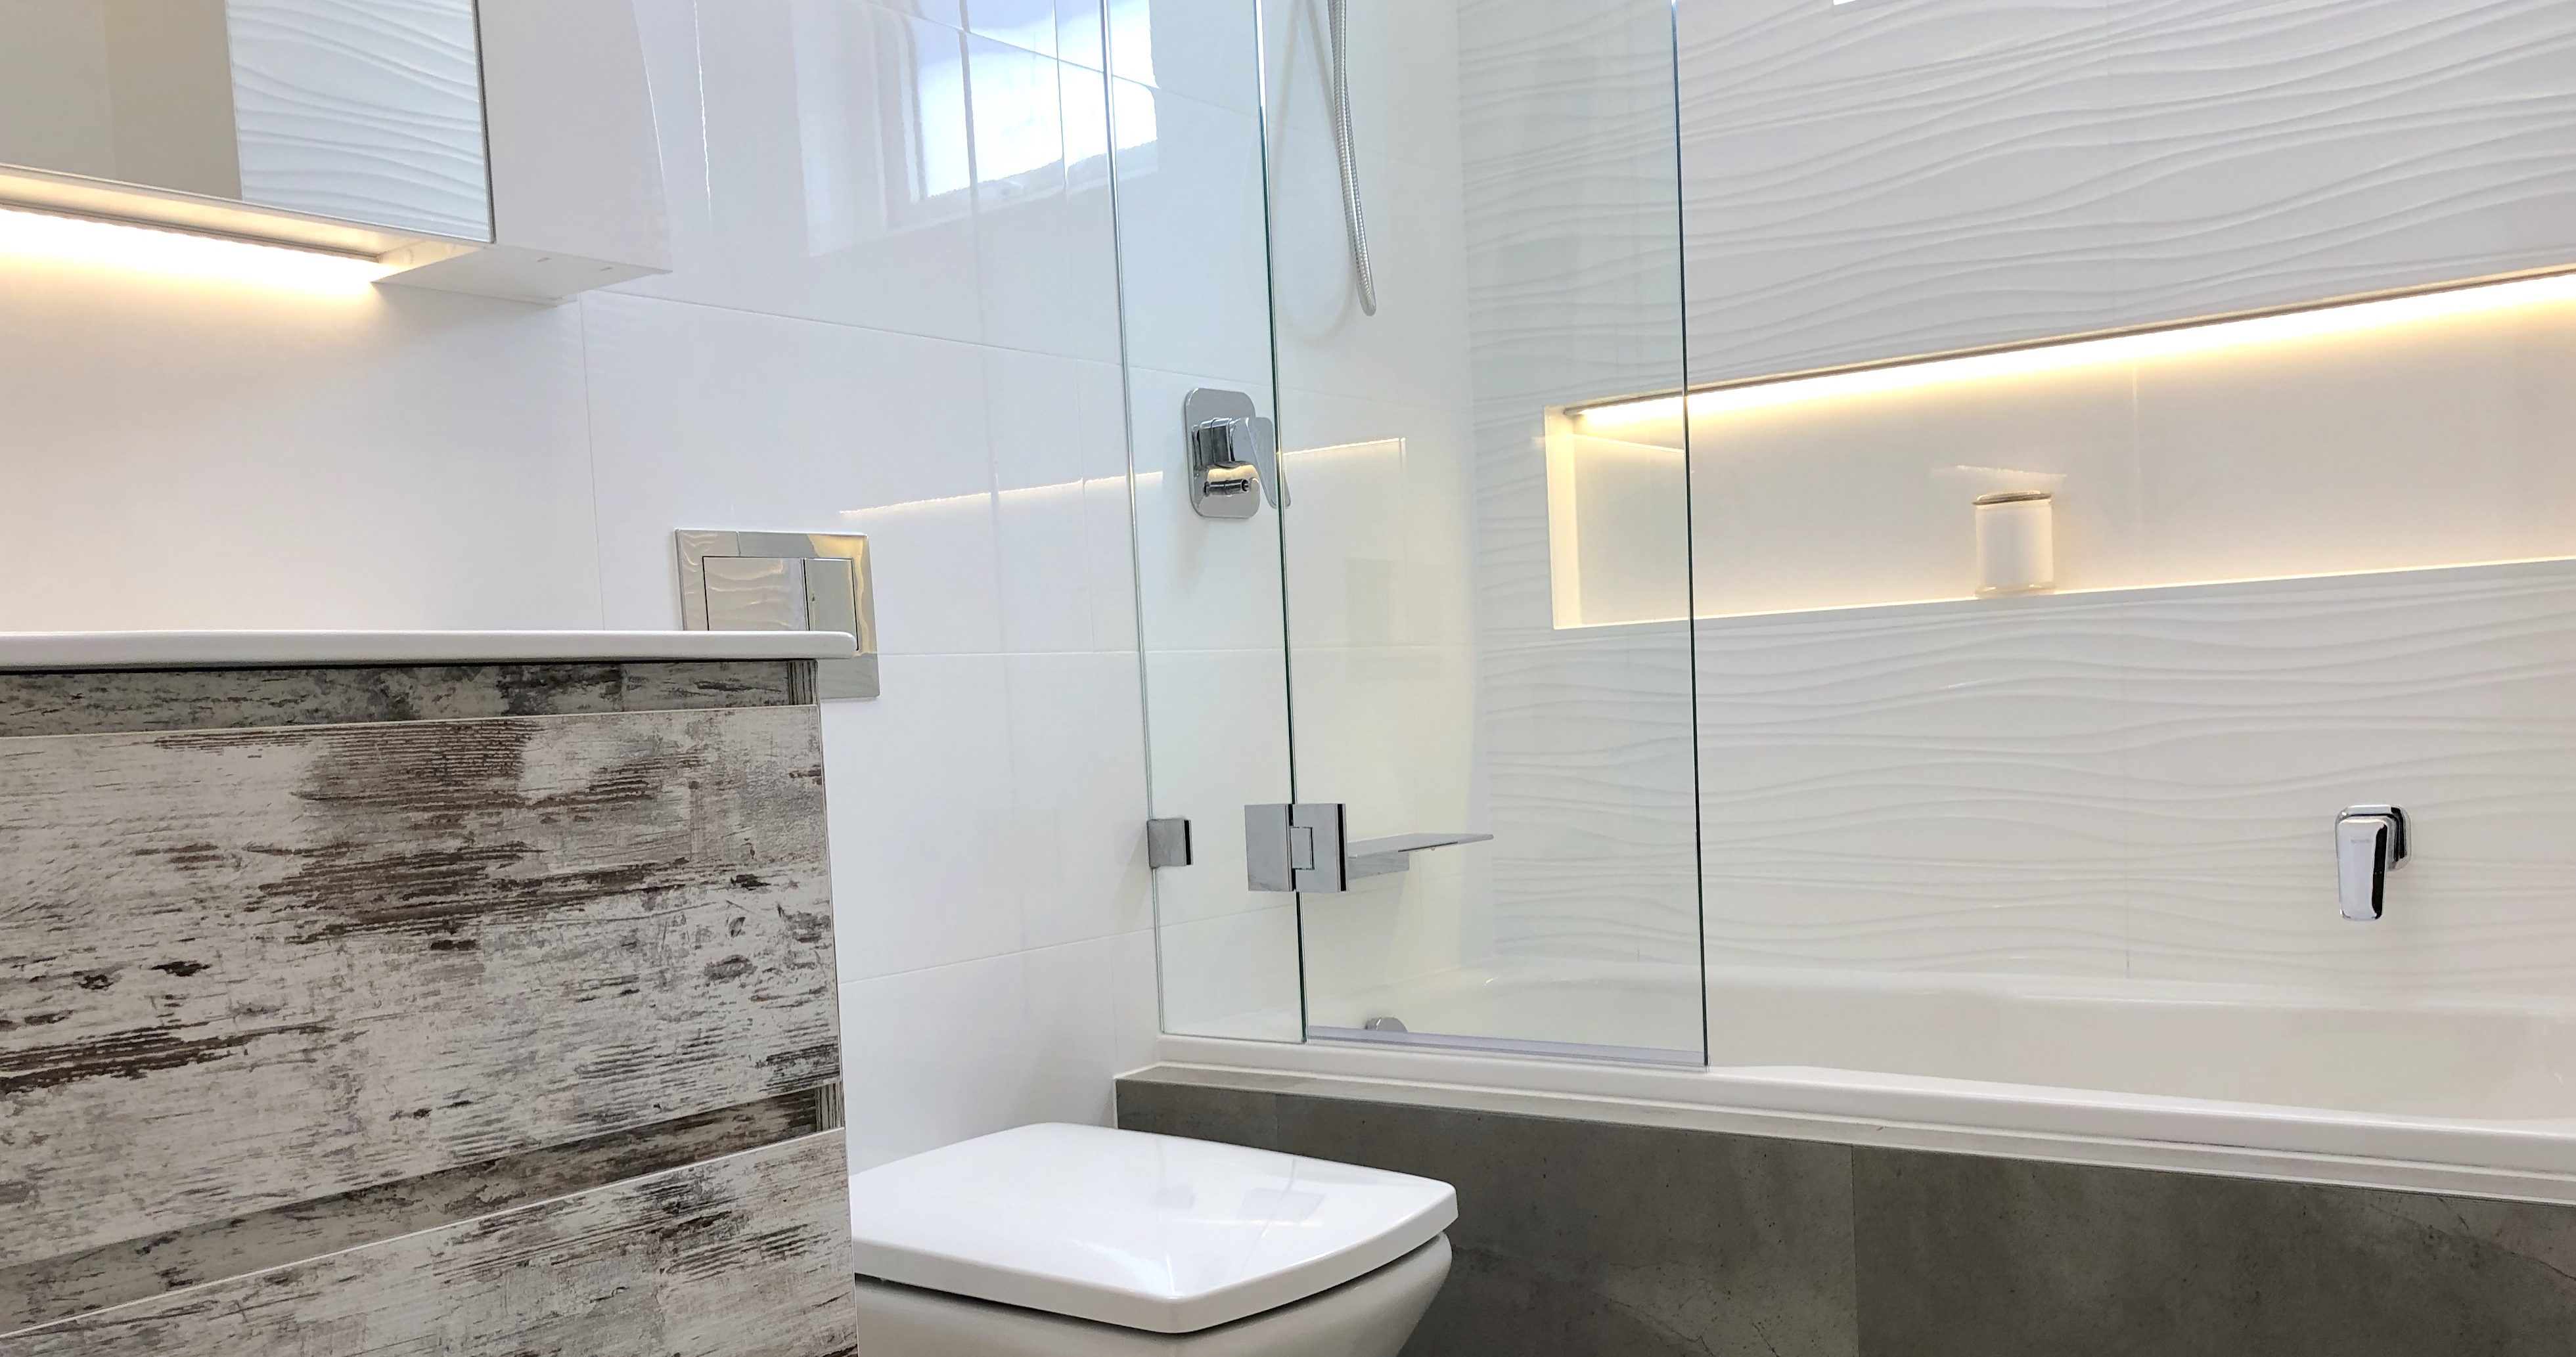 Stunning shower bath combination - bathroom renovation by Master Bathrooms & Kitchens